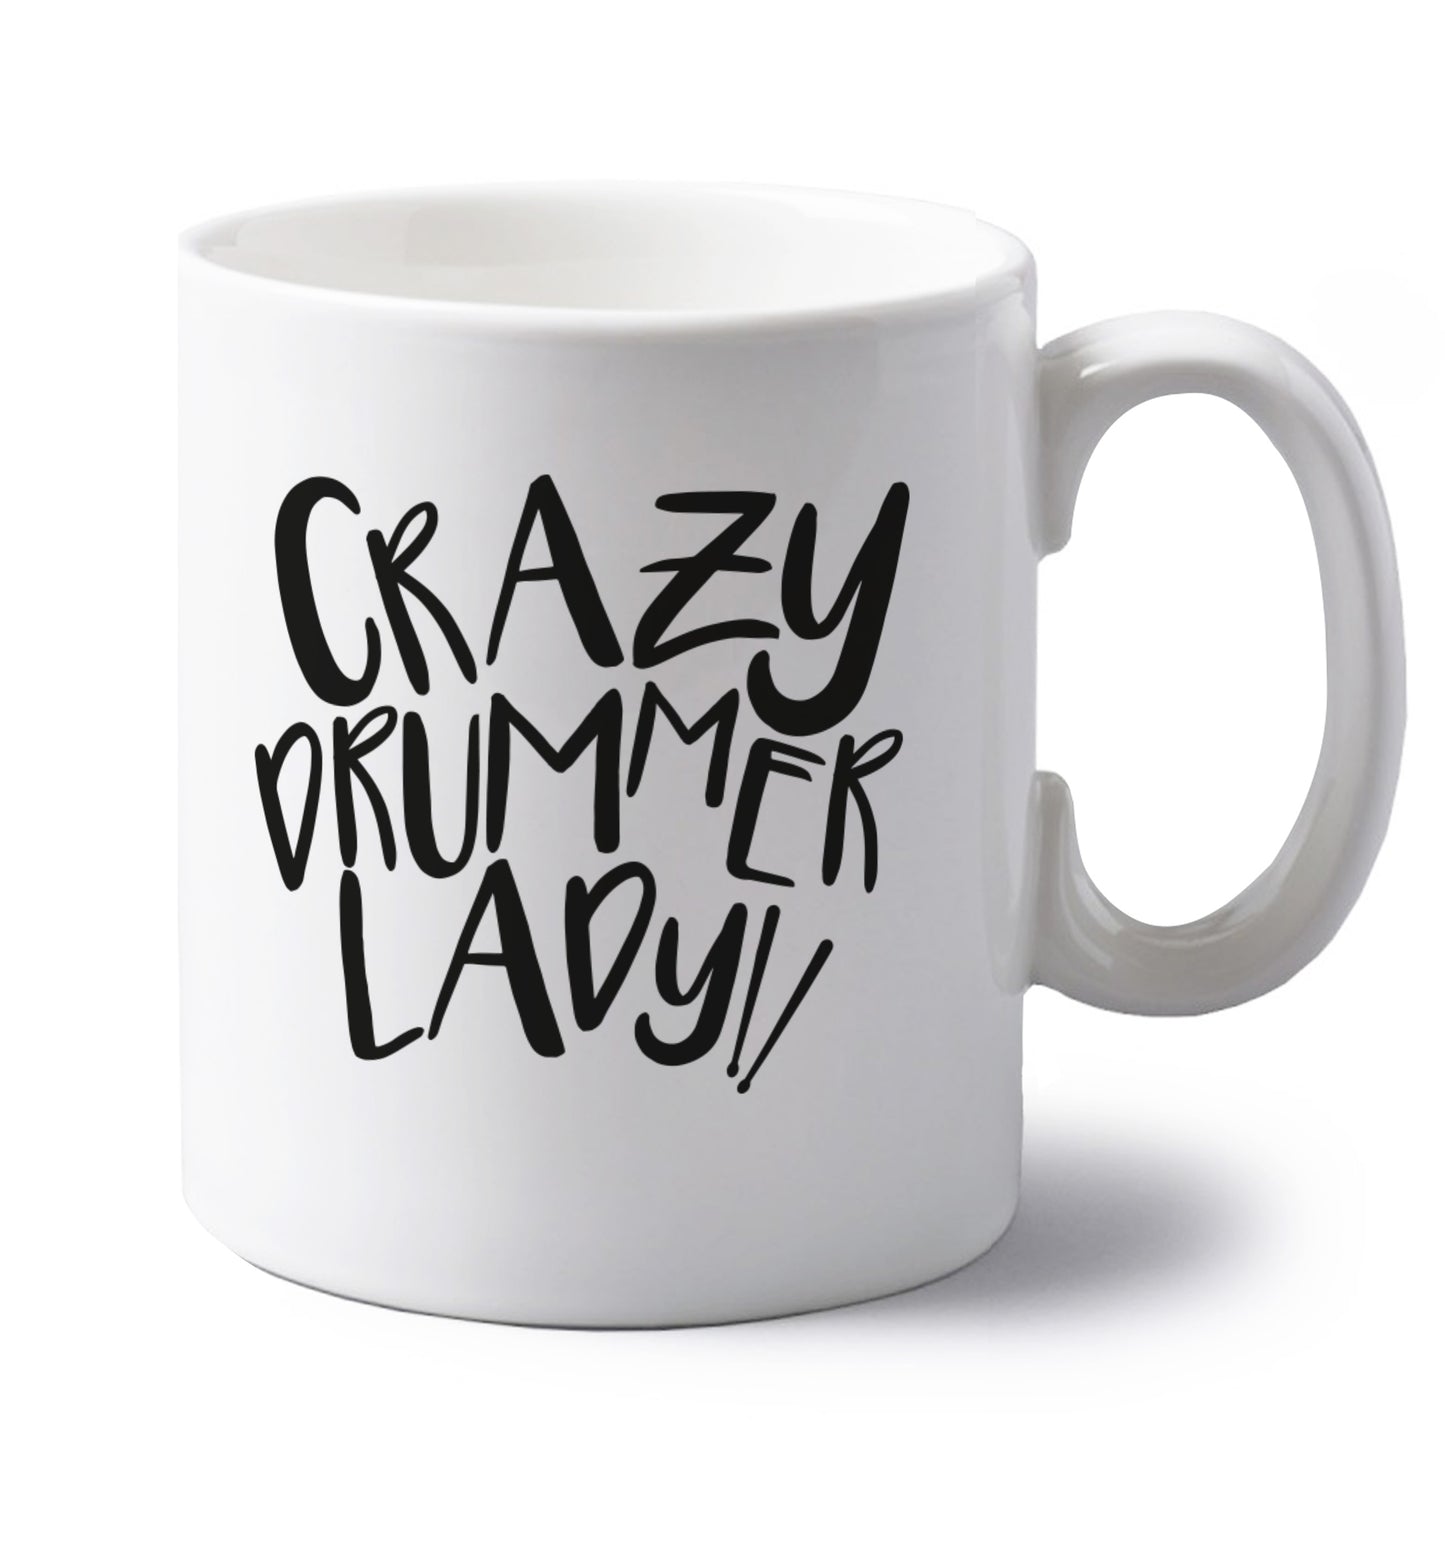 Crazy drummer lady left handed white ceramic mug 